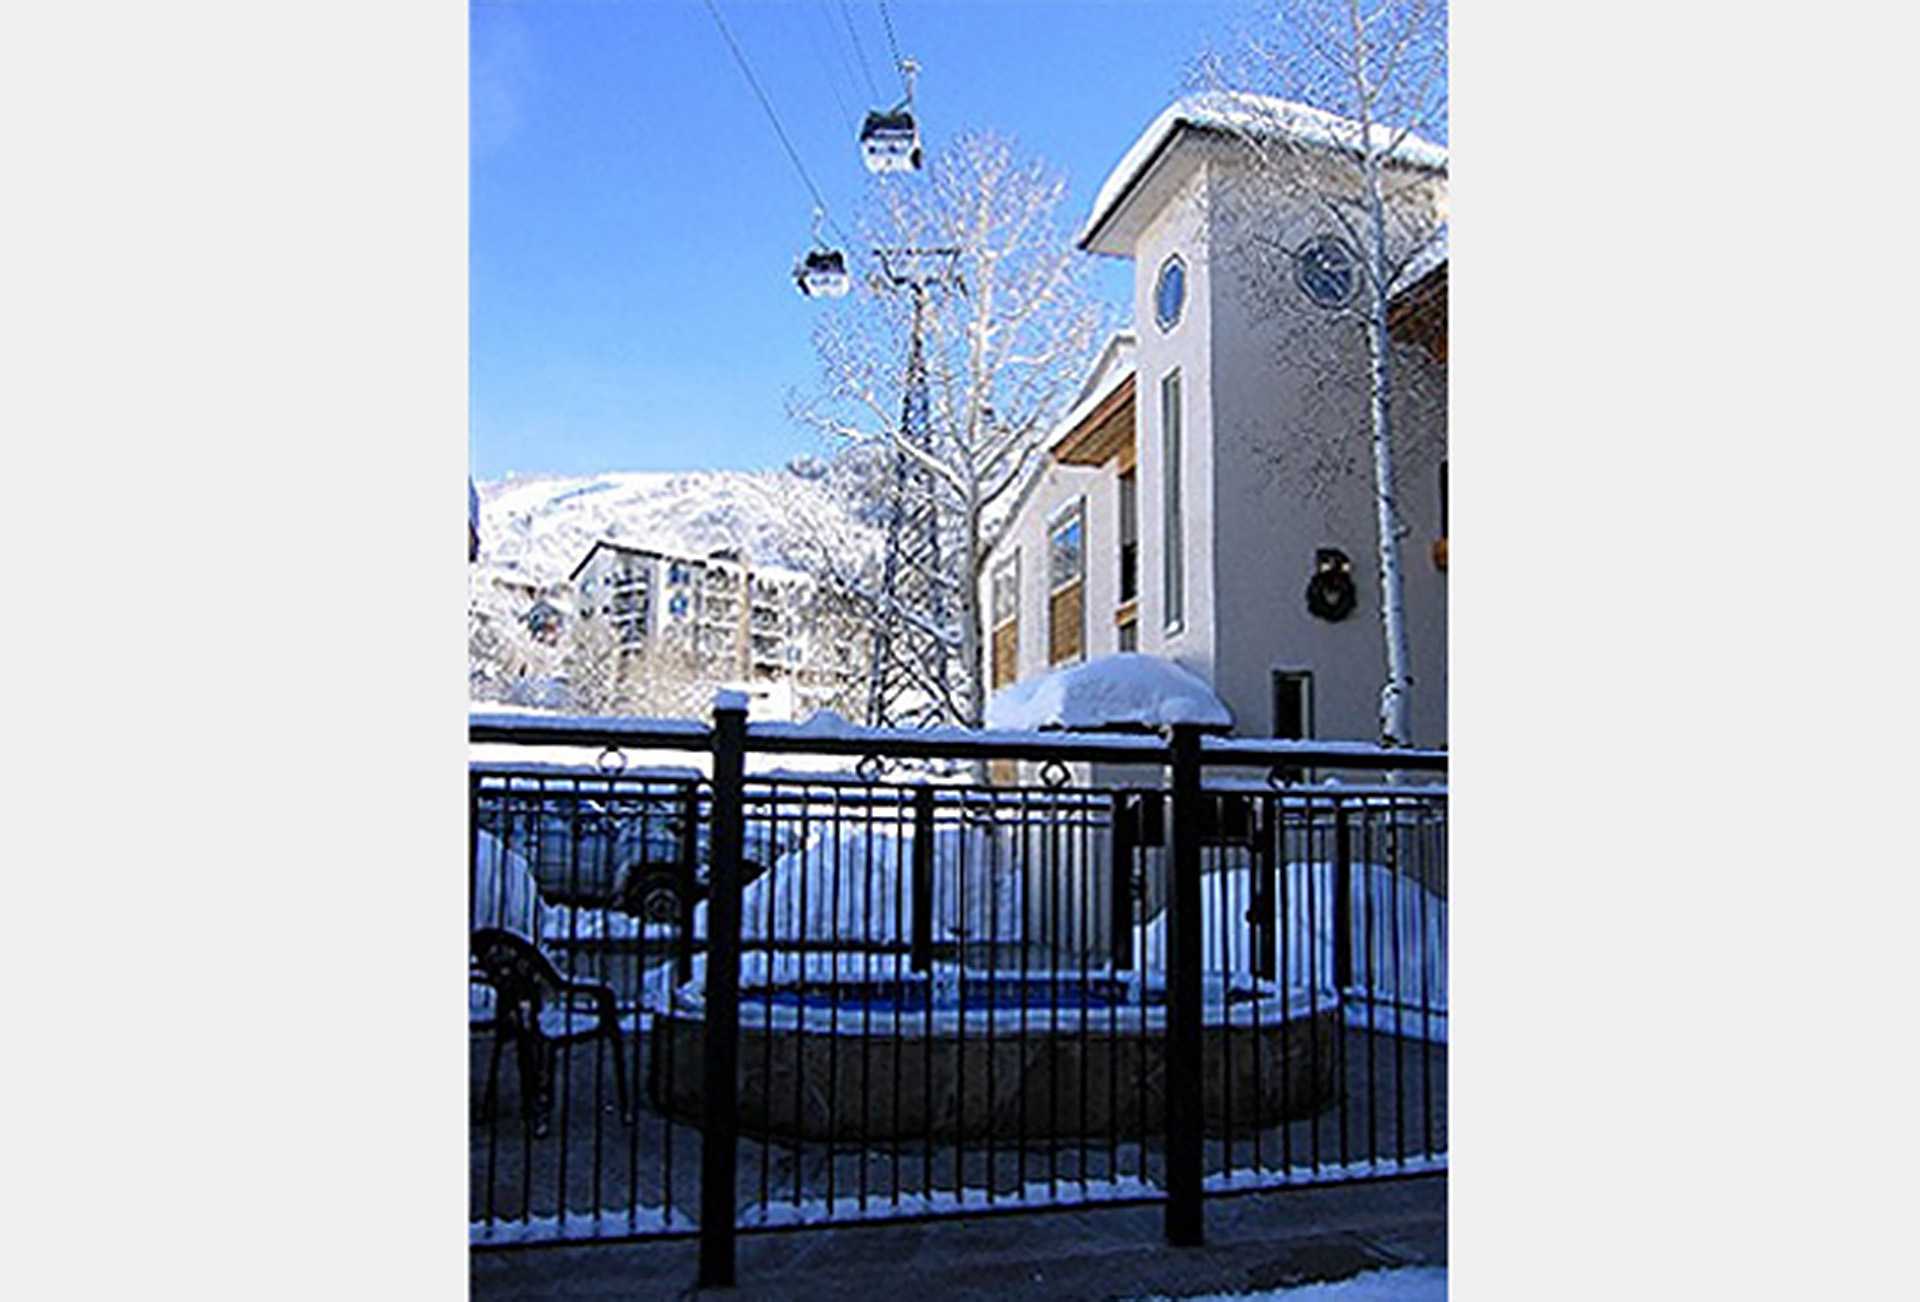 SK302: Ski Trail Condominiums